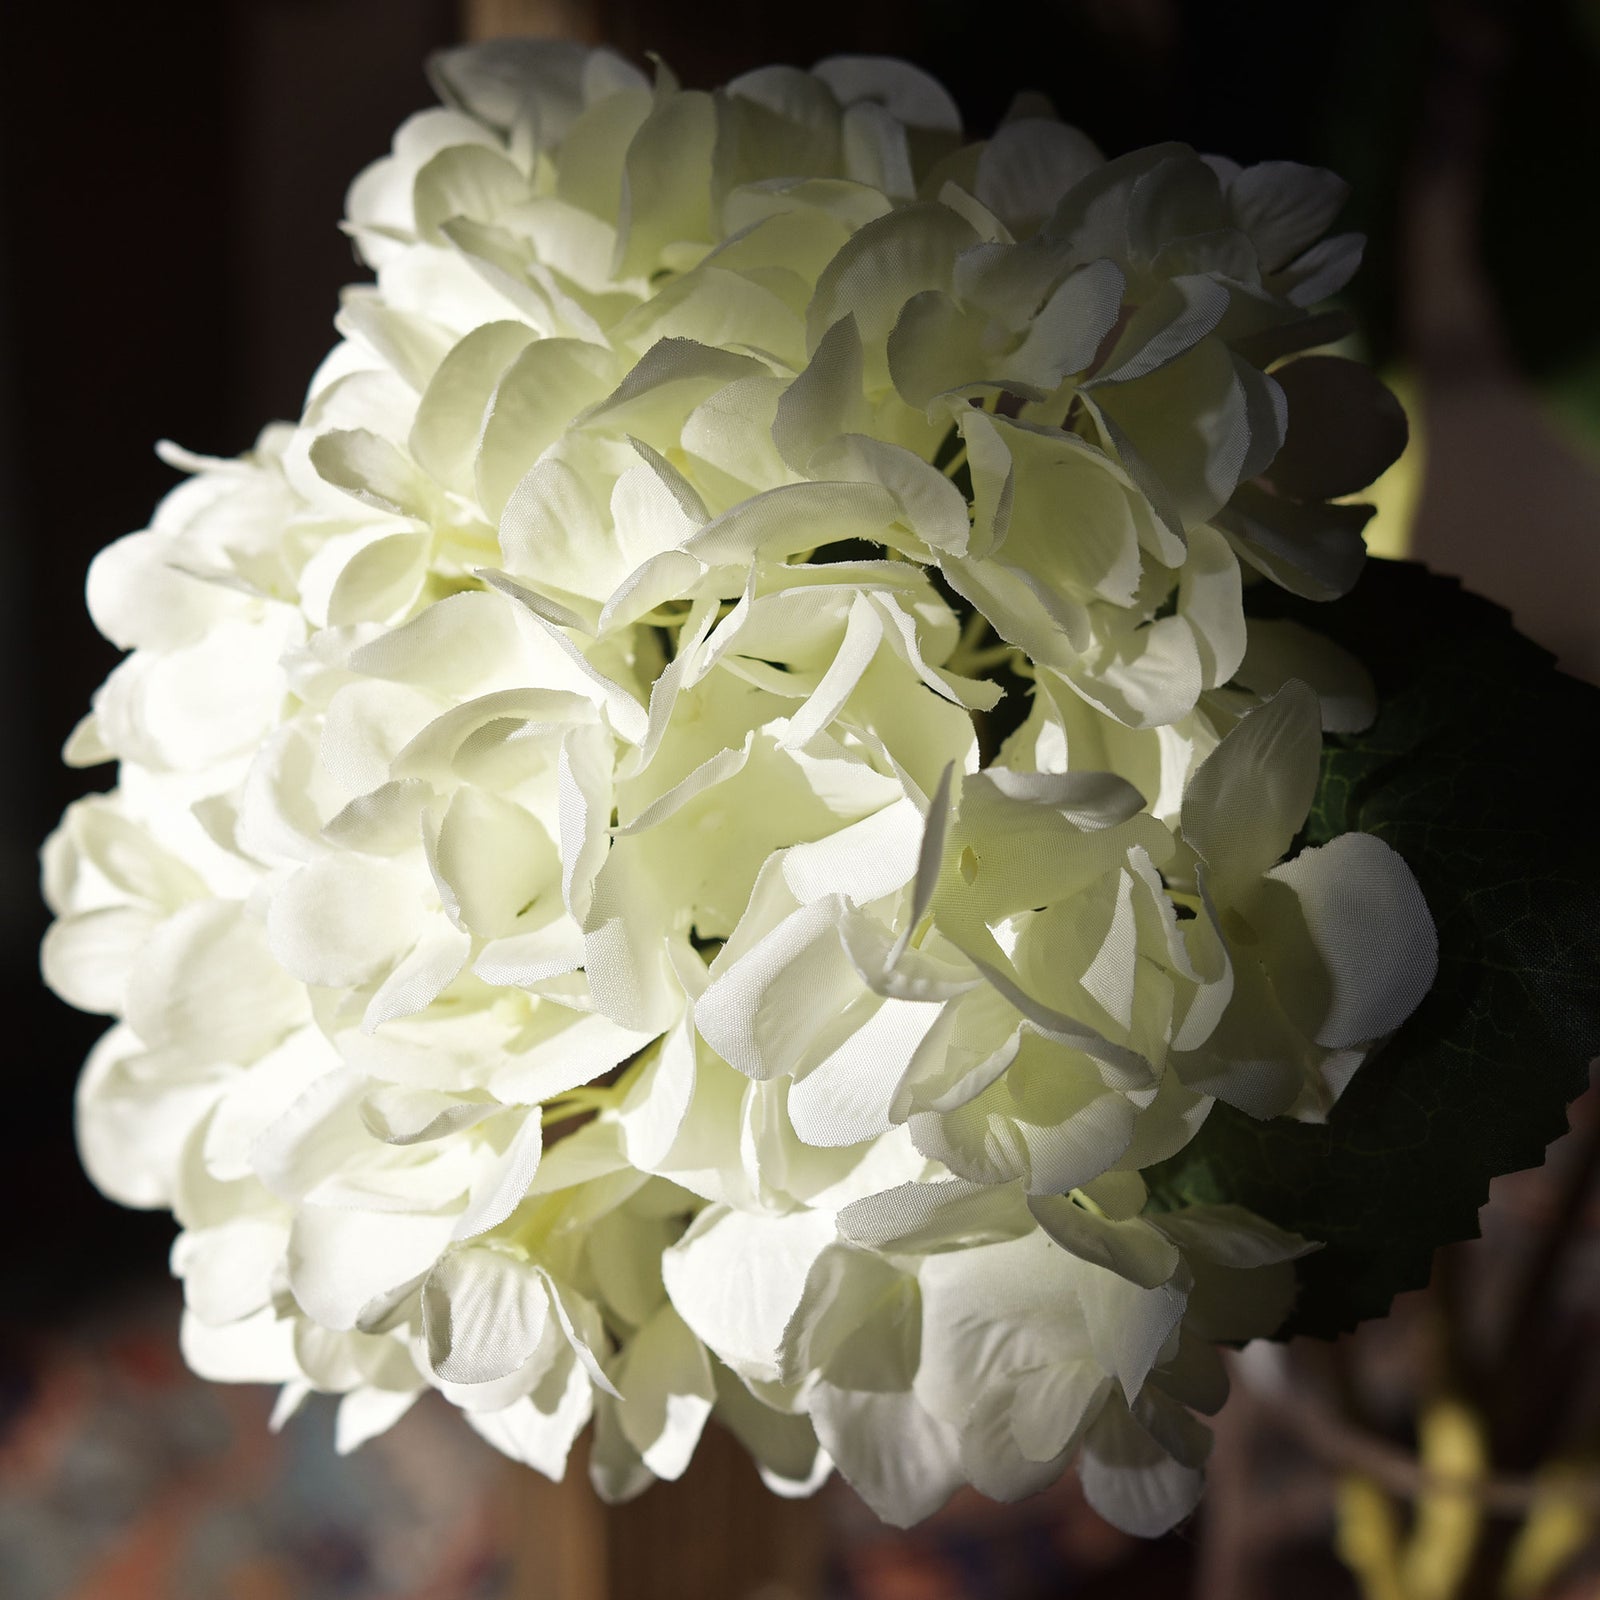 5 Stems White Artificial Silk Hydrangea Flowers